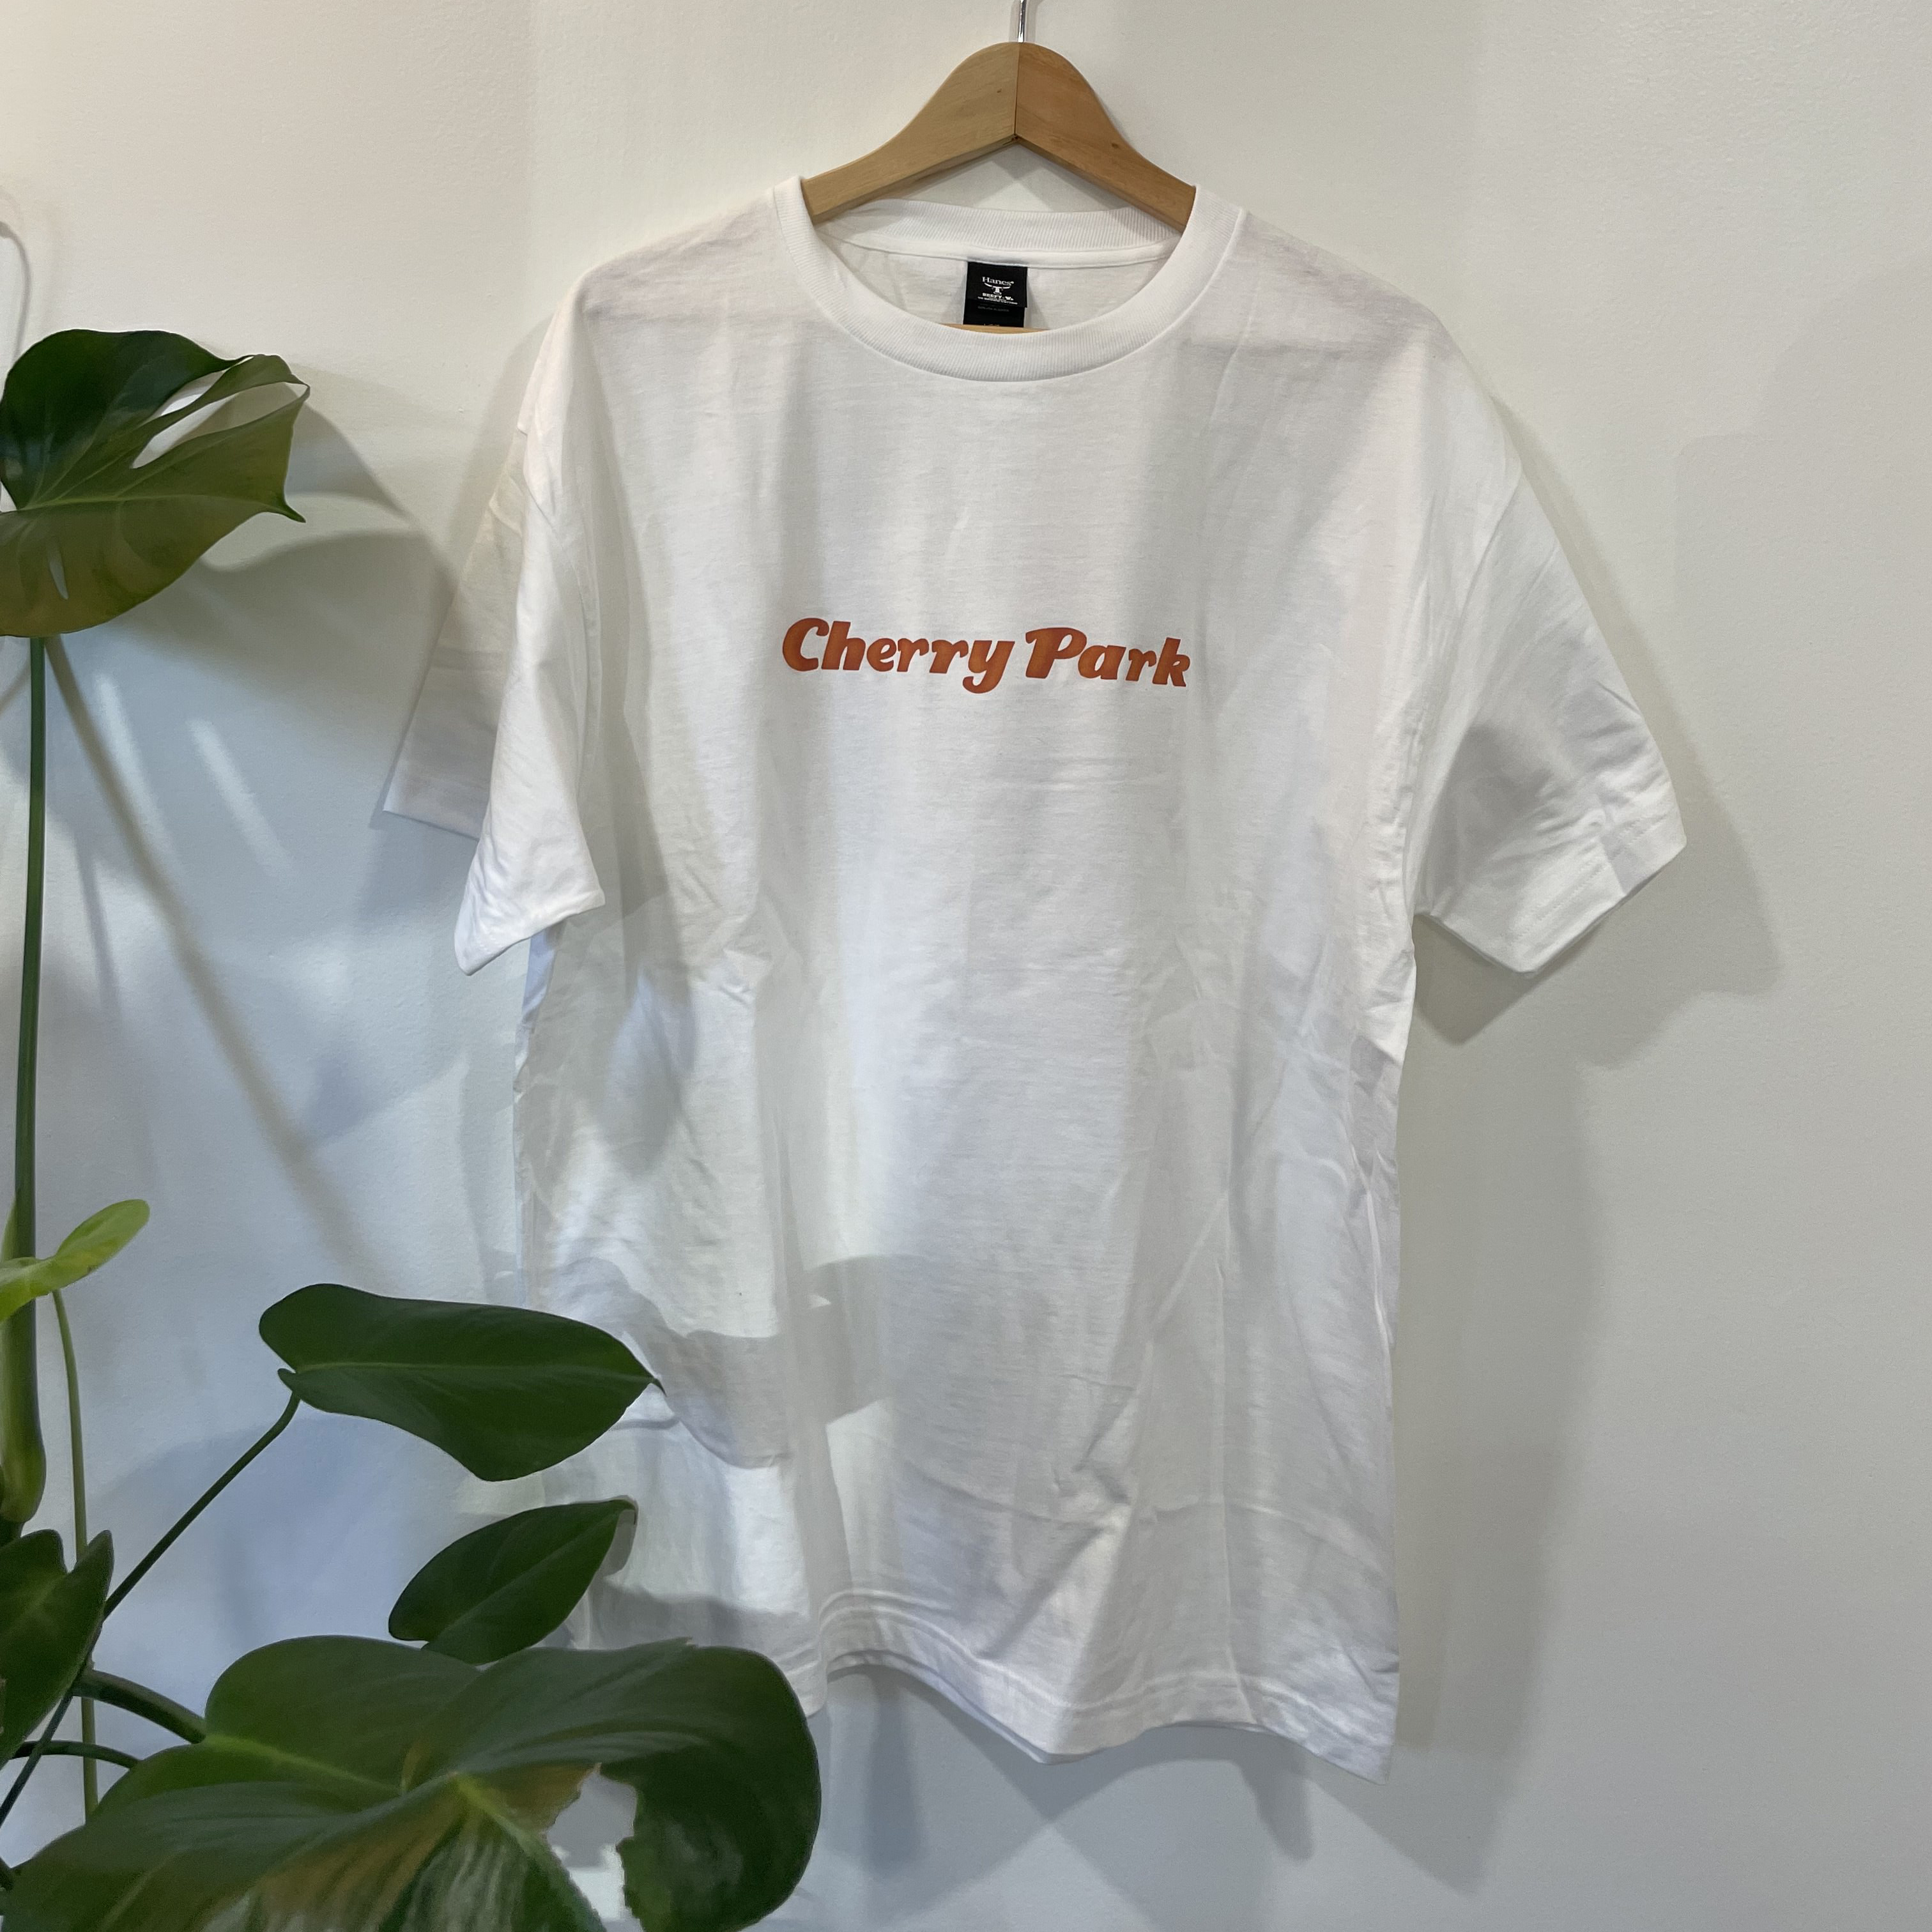 Cherry Park band's clothing merchandise style option: White Shirt